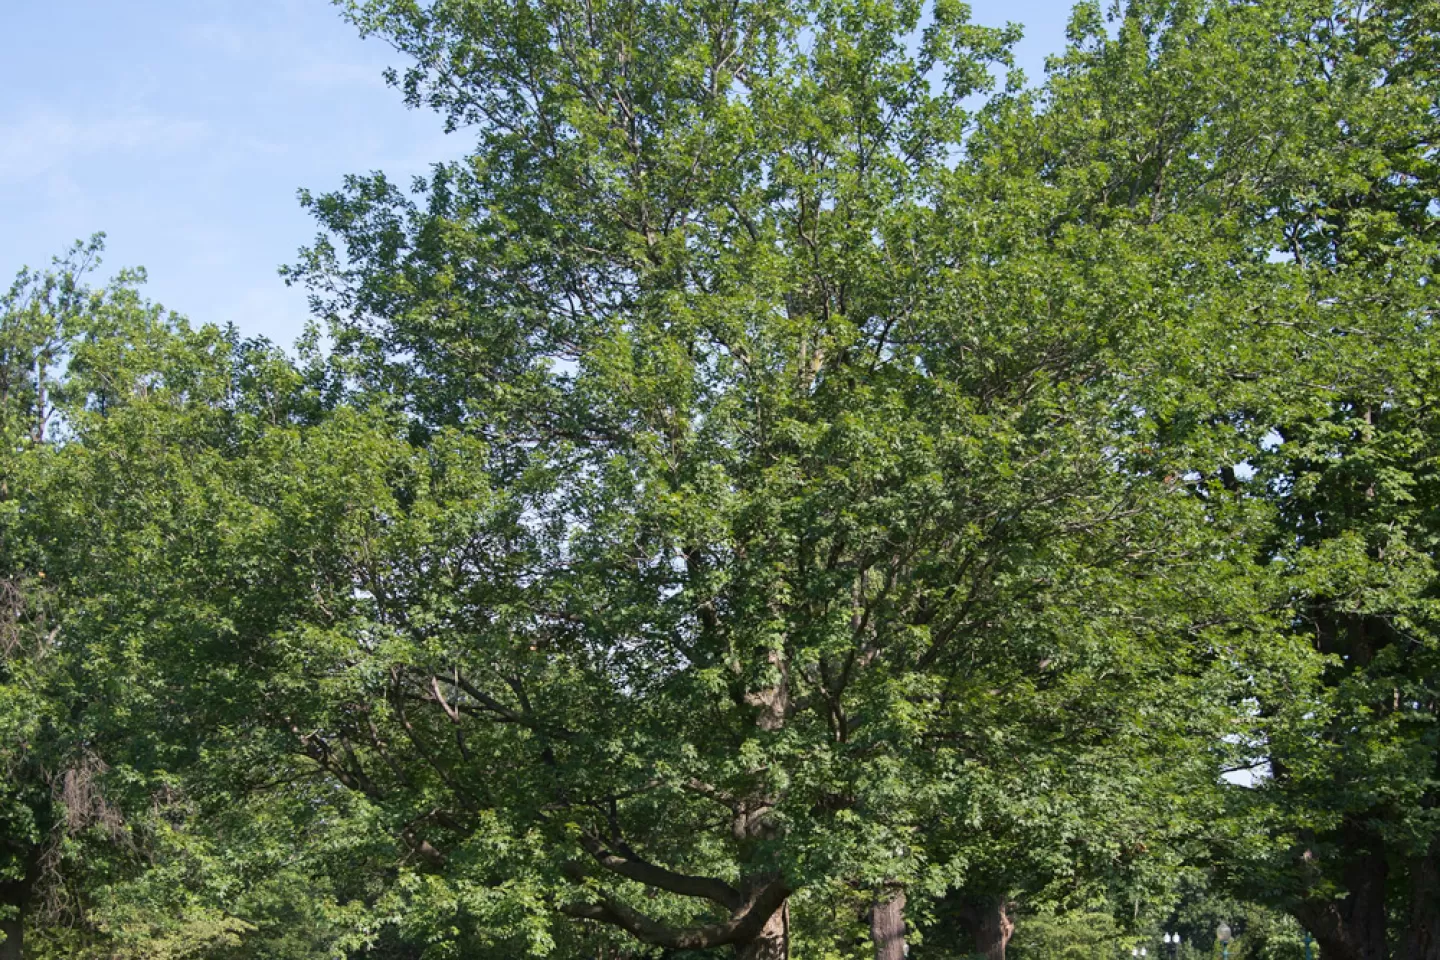 The Senator Saltonstall tree on the U.S. Capitol Grounds during summer.